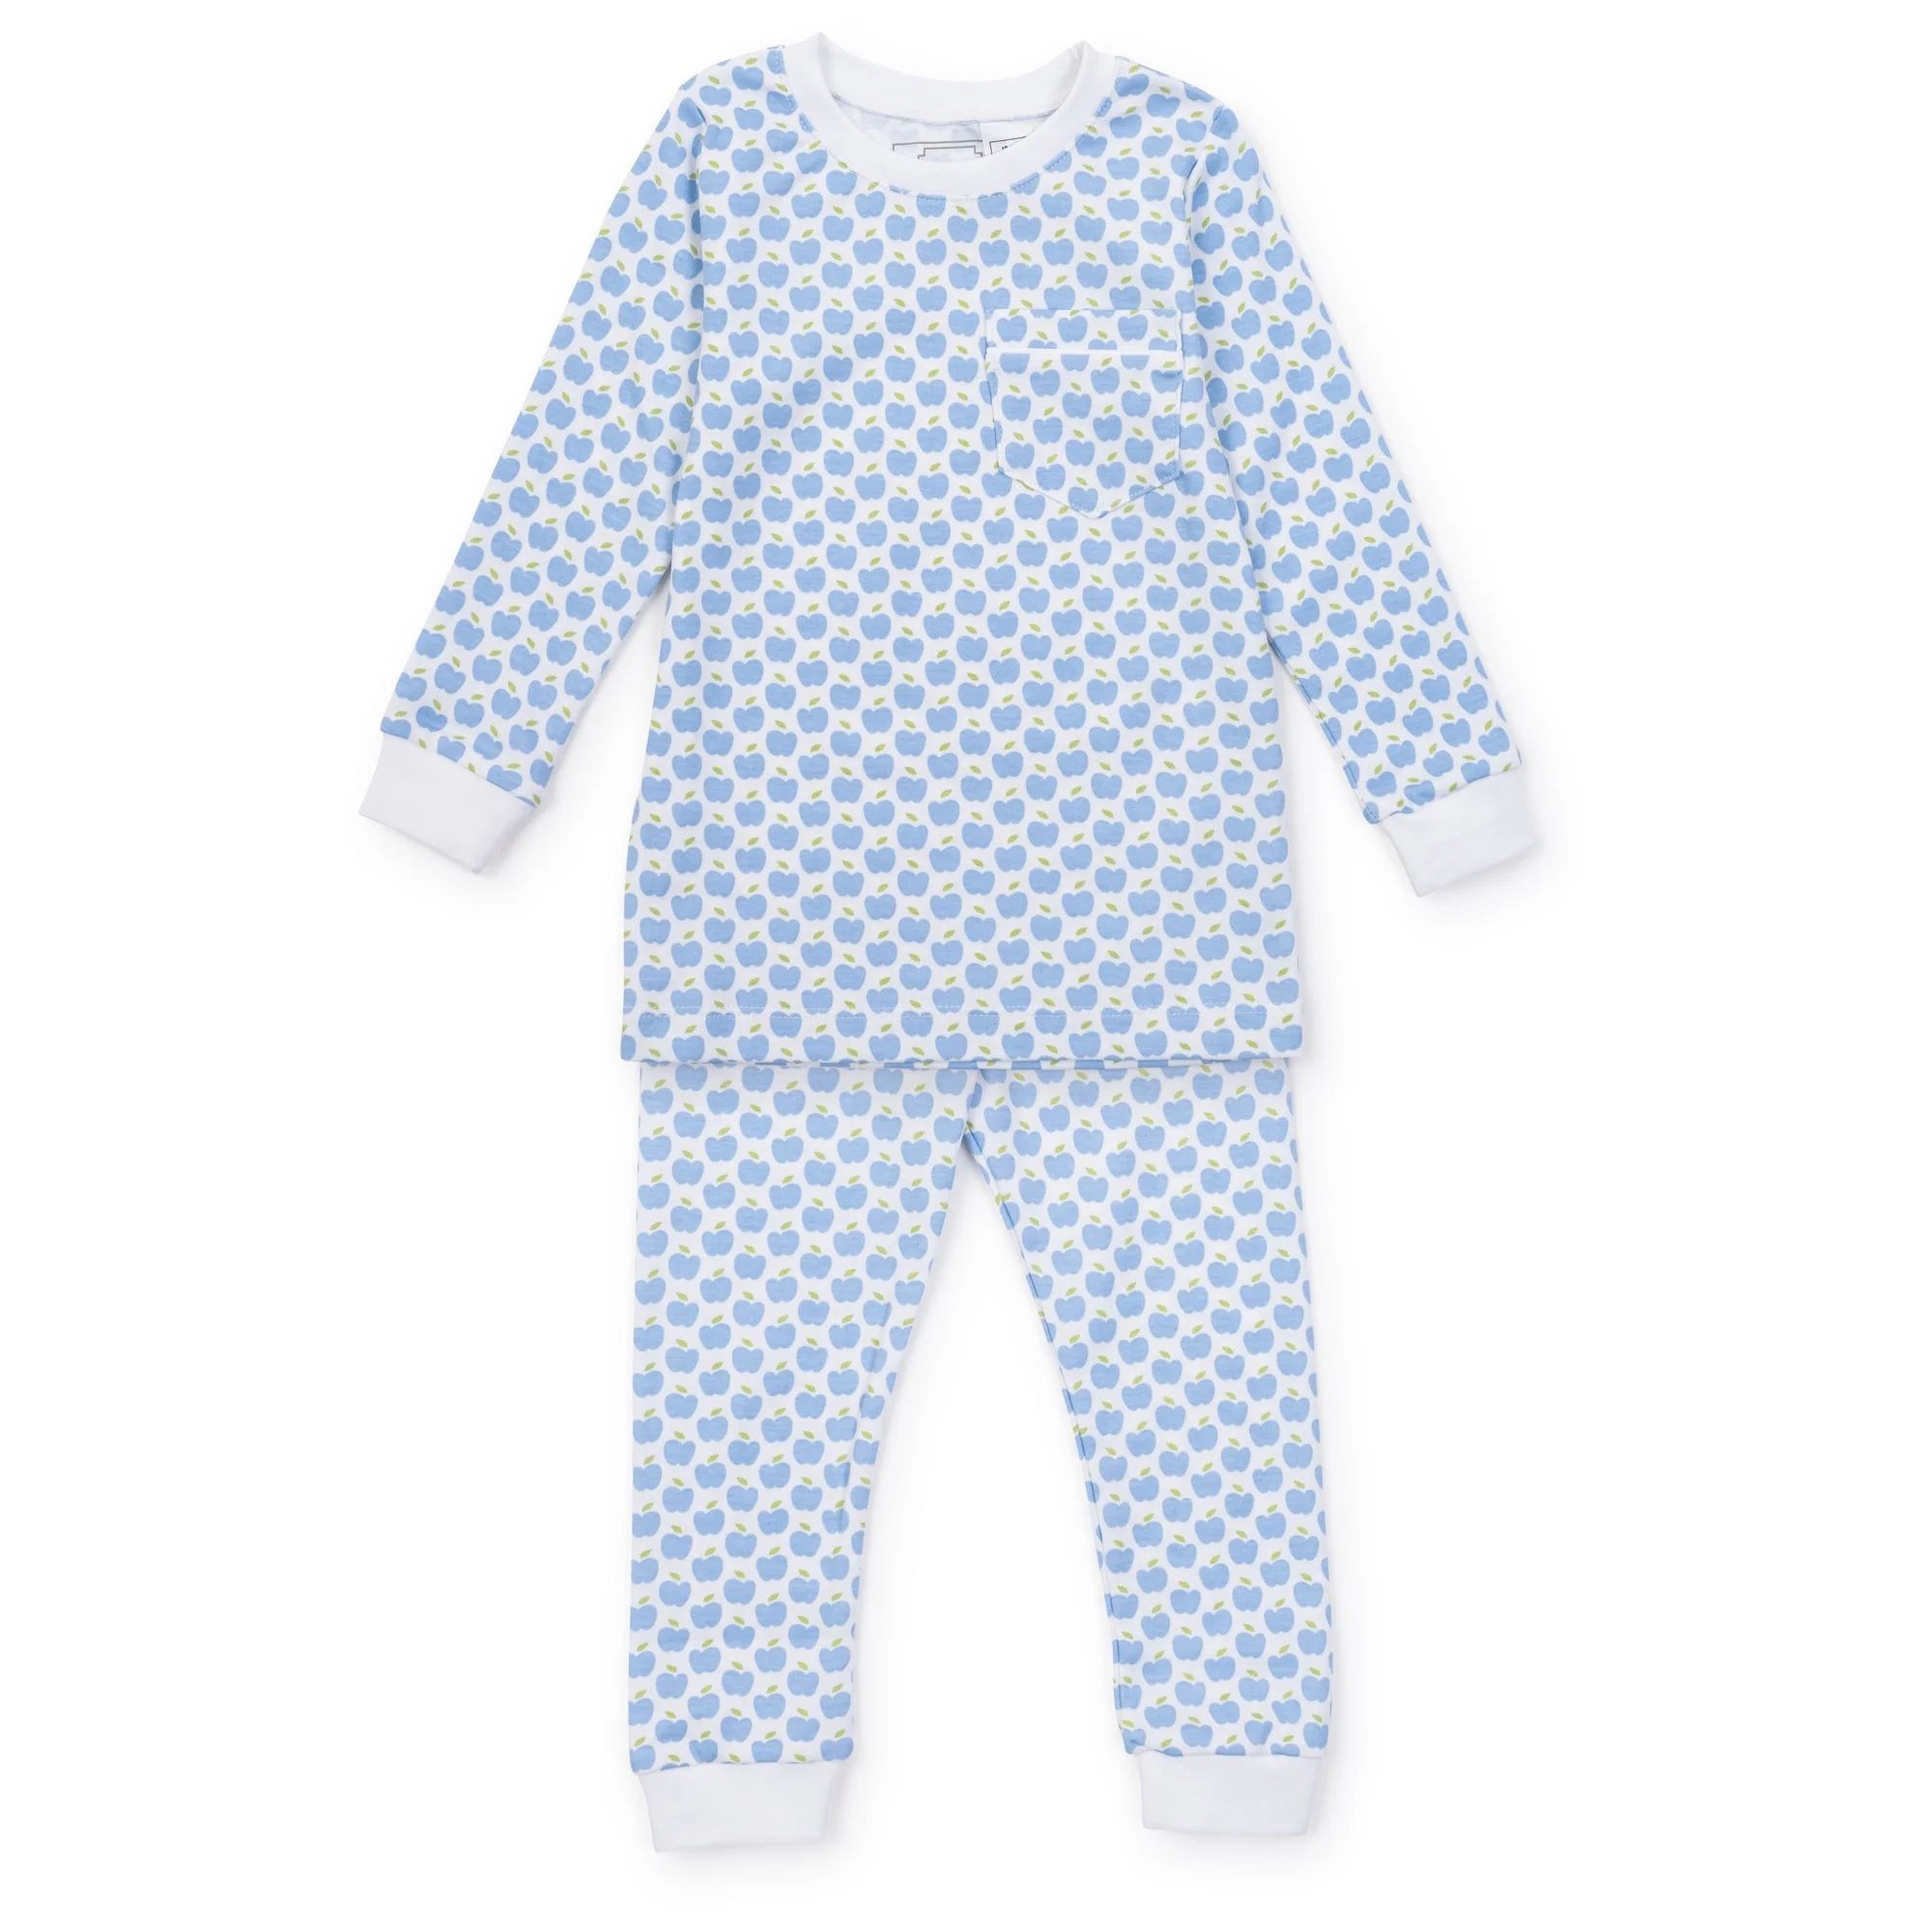 Lila and Hayes Bradford Pajama Pant Set - Apples Blue | JoJo Mommy